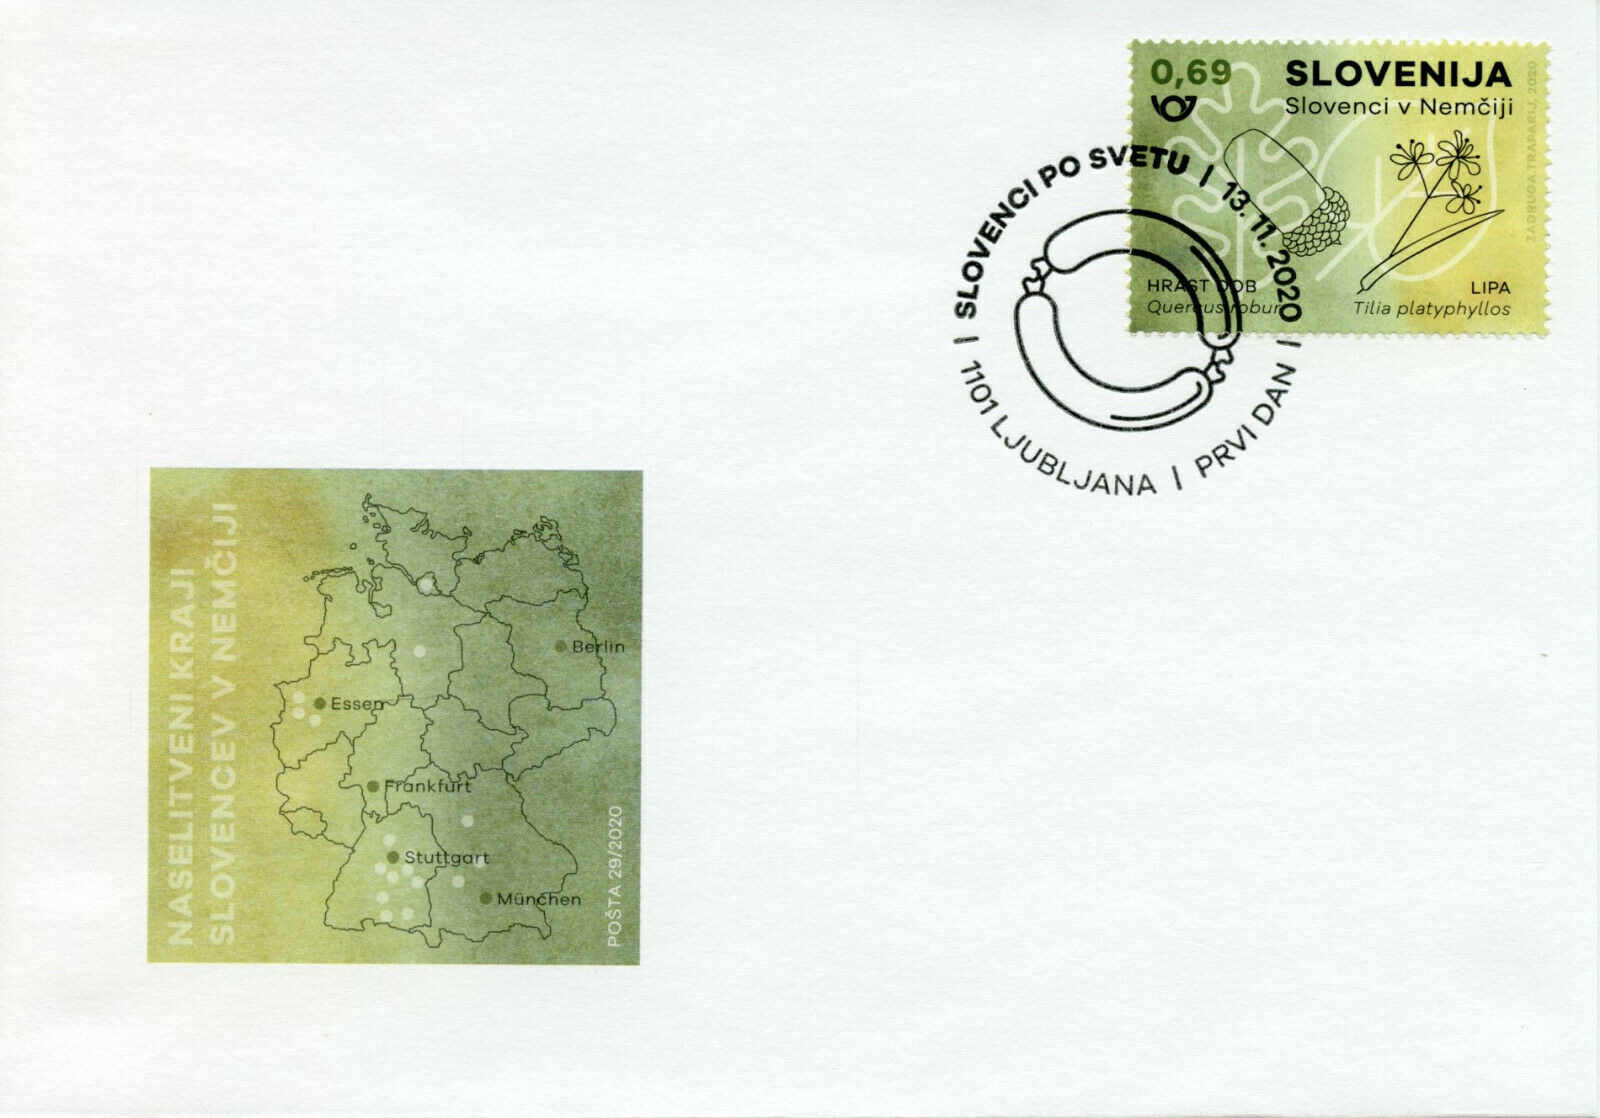 Slovenia Trees Stamps 2020 FDC Sloves in Germany Oak Leaves Plants Nature 1v Set